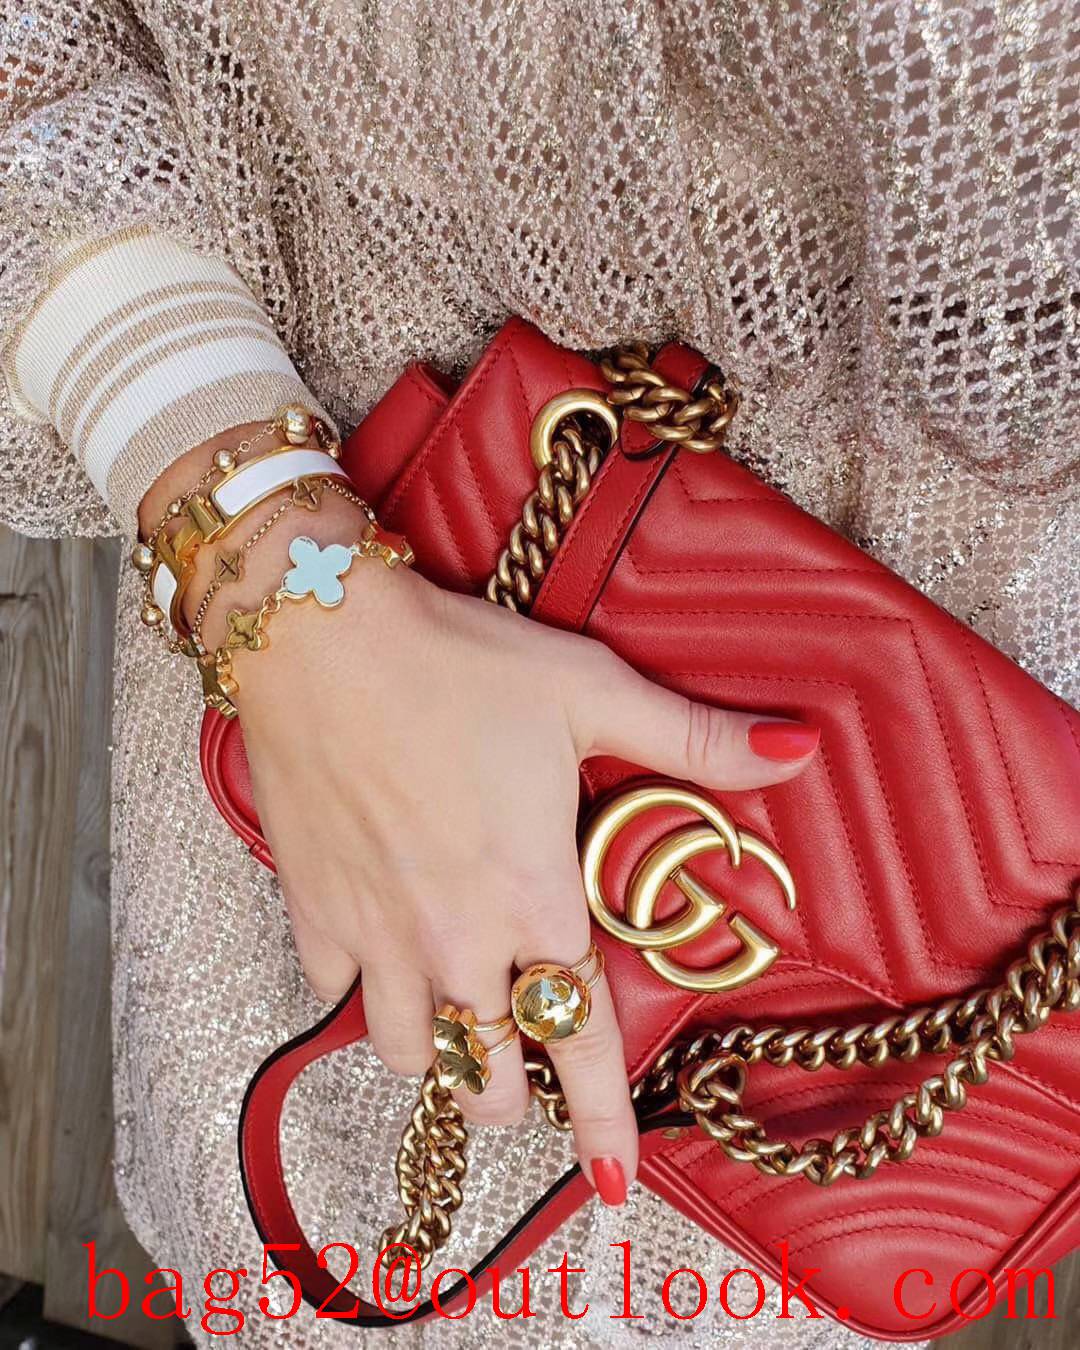 Gucci marmont medium original leather pink women's chain handbag